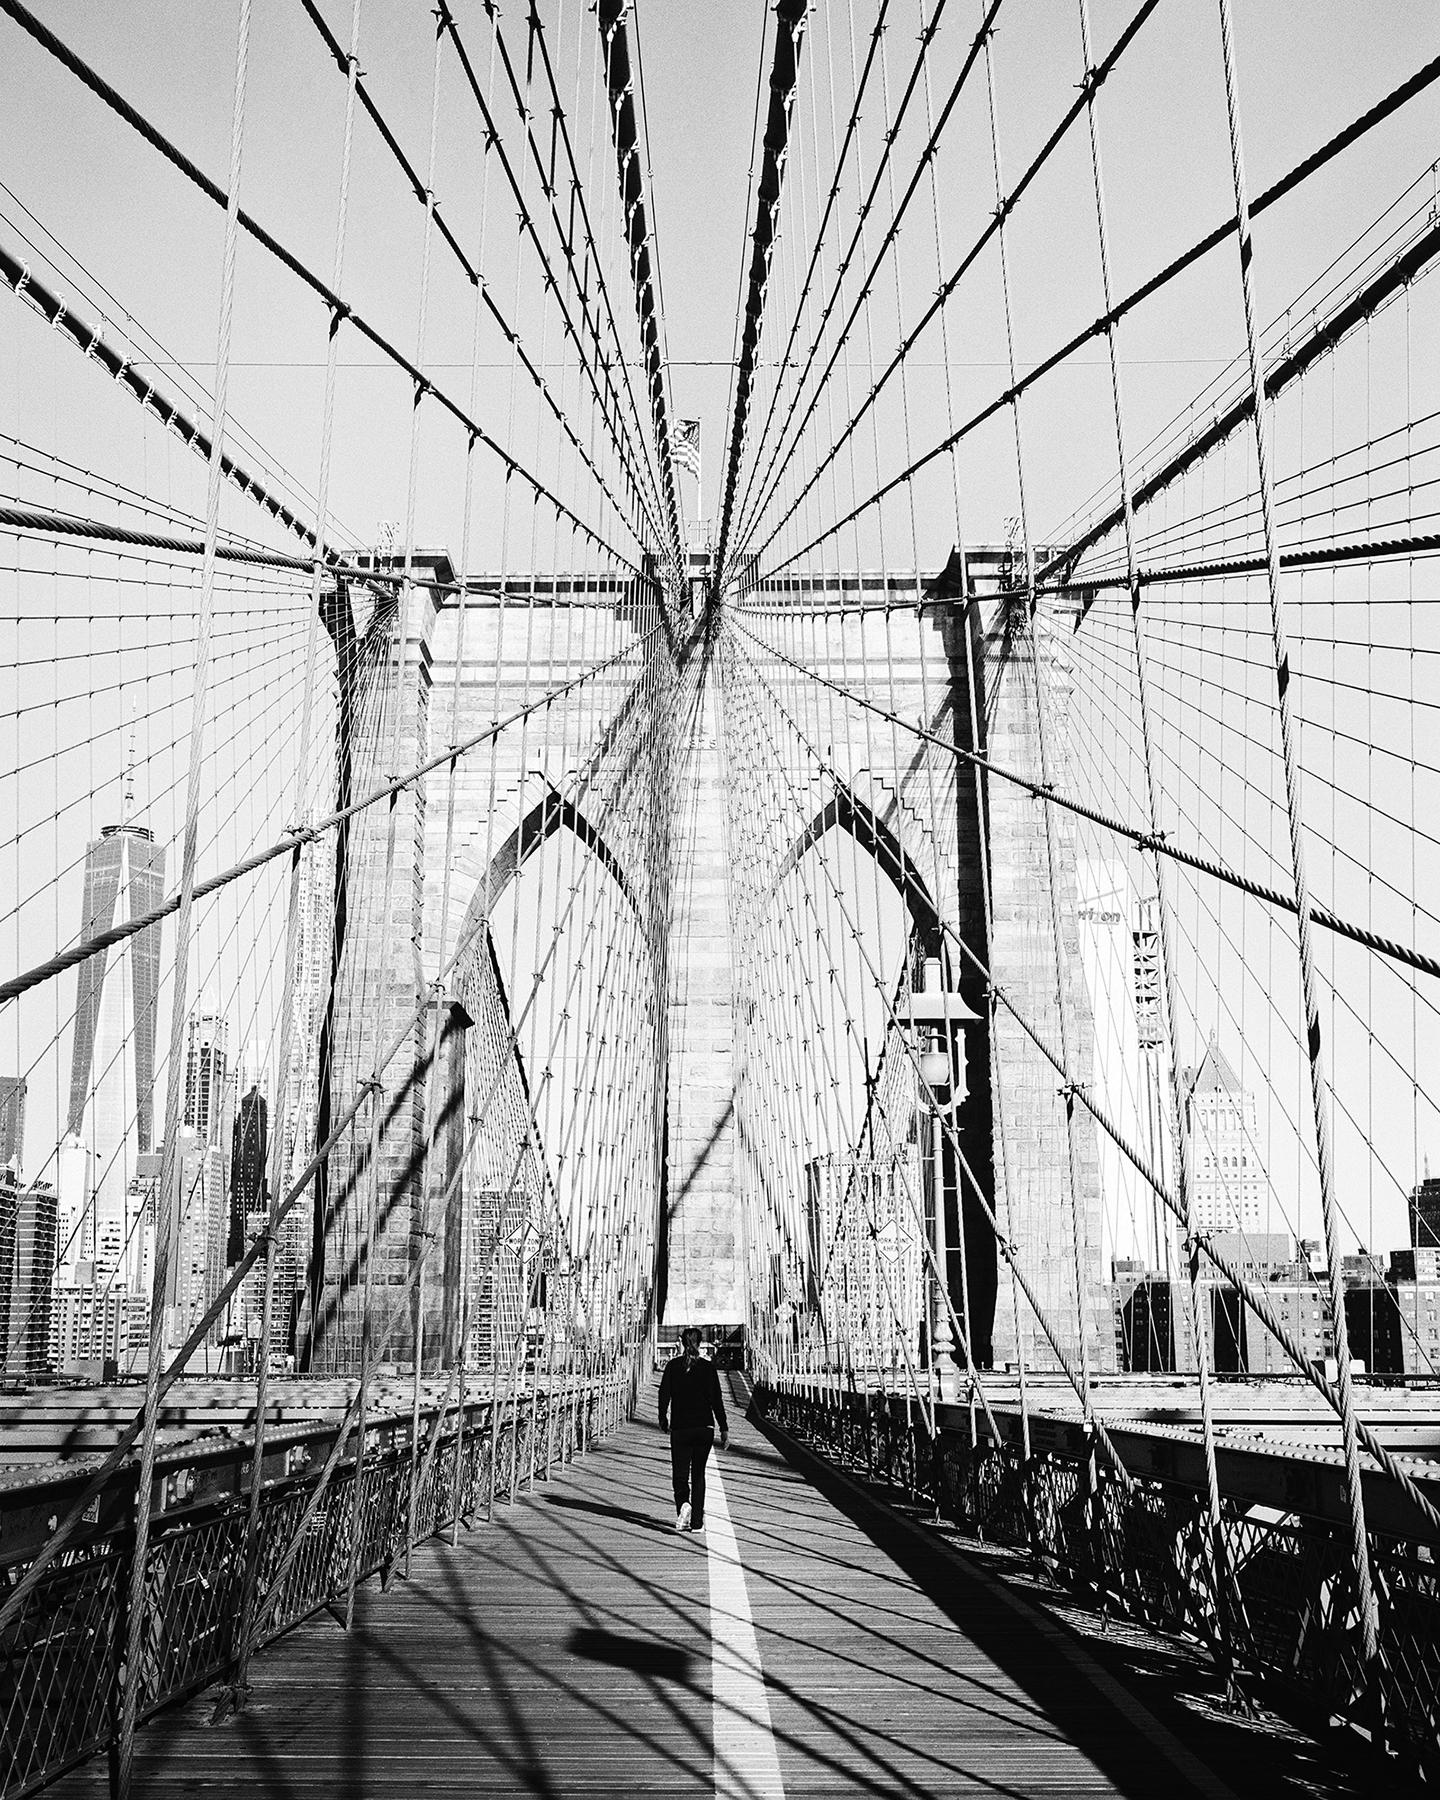 Gerald Berghammer Landscape Photograph - Brooklyn Bridge, New York City, USA, black and white photography, art cityscape